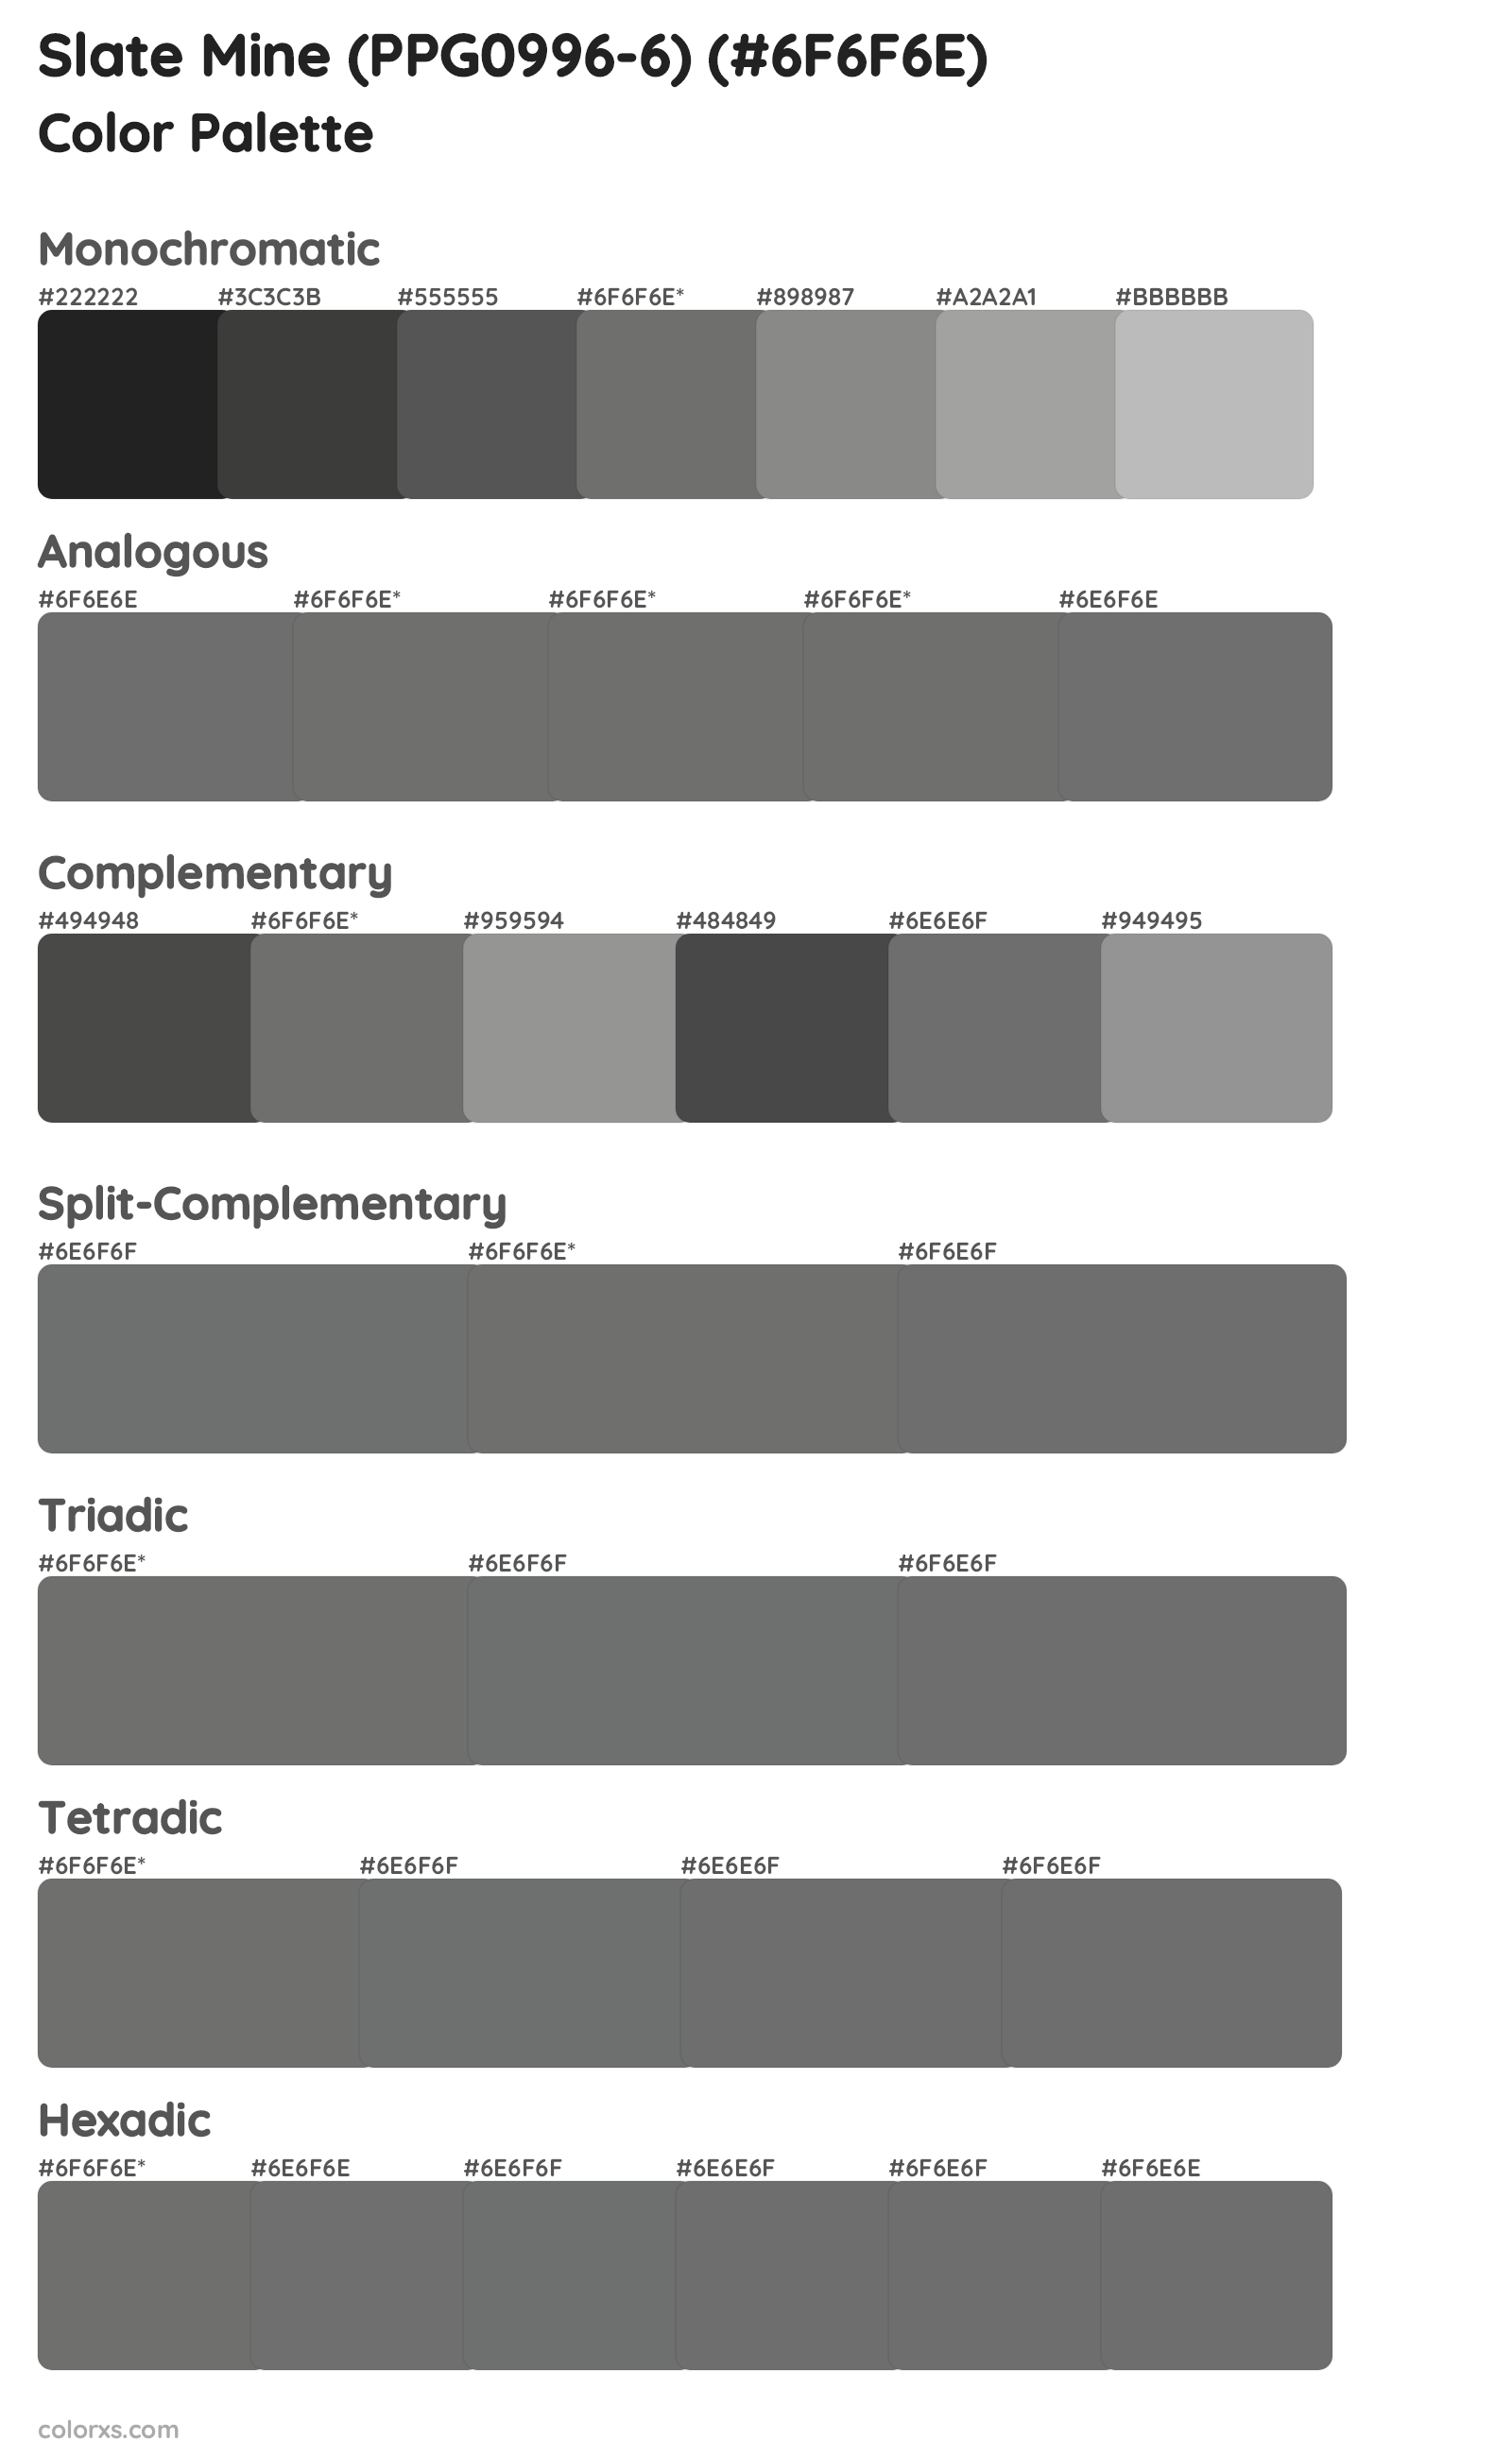 Slate Mine (PPG0996-6) Color Scheme Palettes